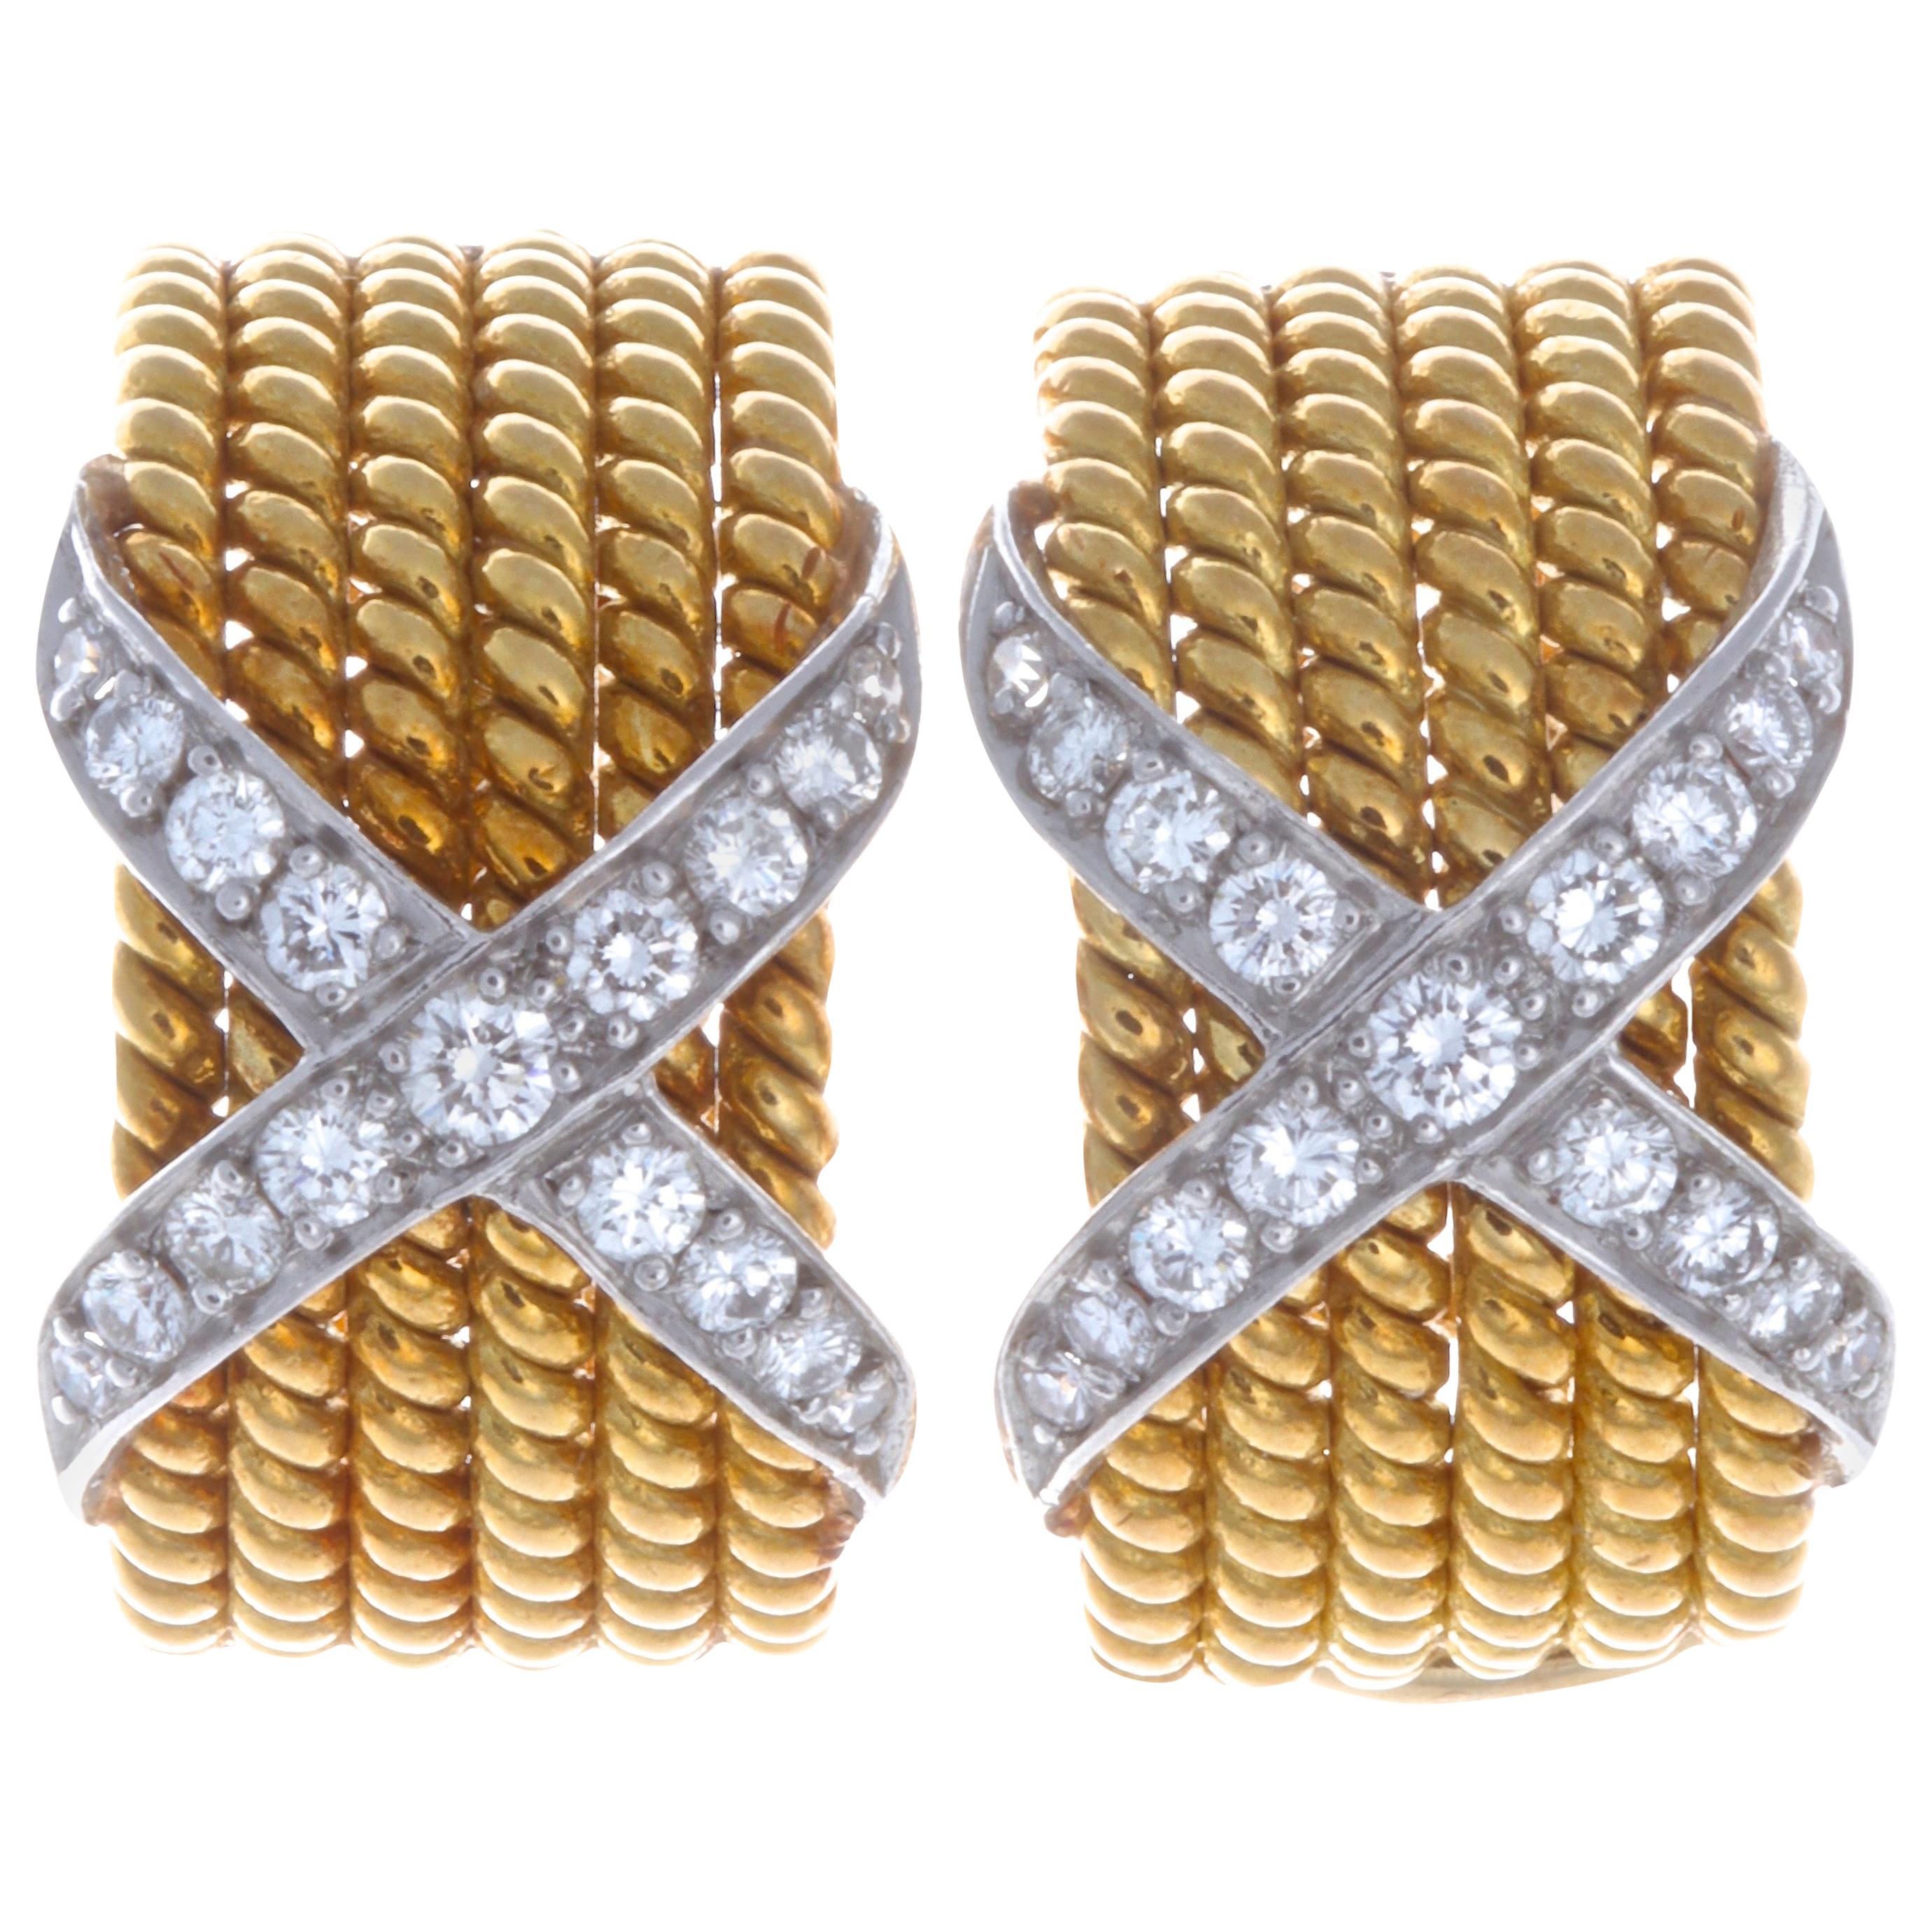 Jean Schlumberger for Tiffany & Co. Diamond 18 Karat Gold Earrings